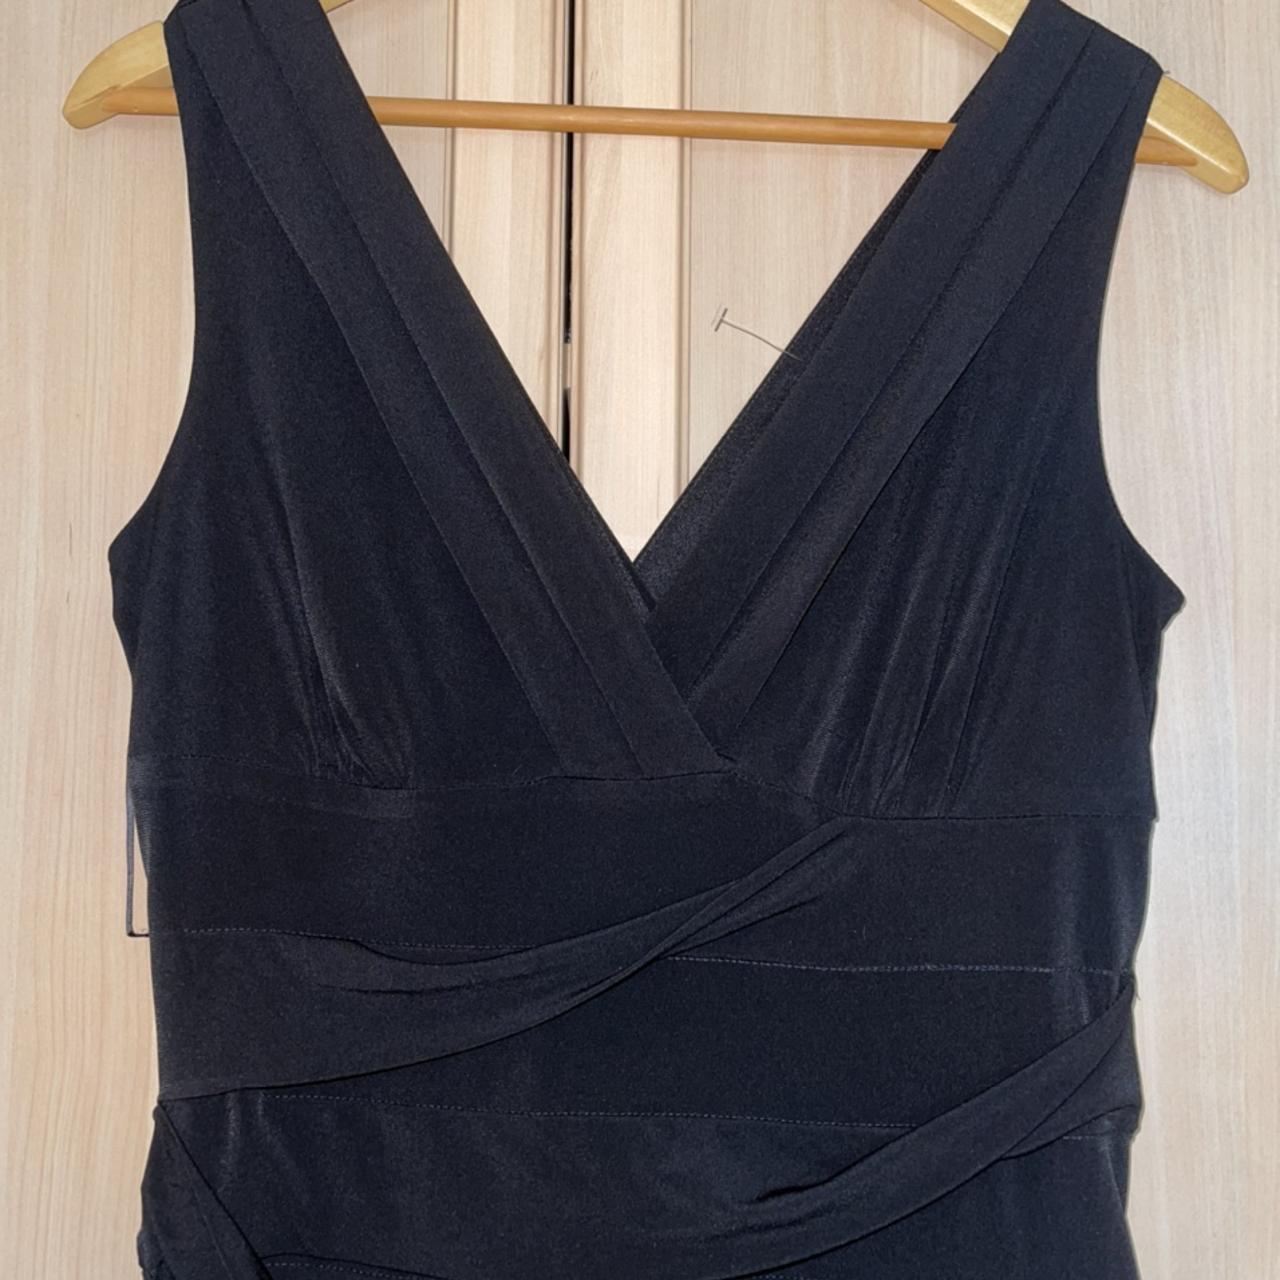 Enfocus Studio Women's Black Dress (2)